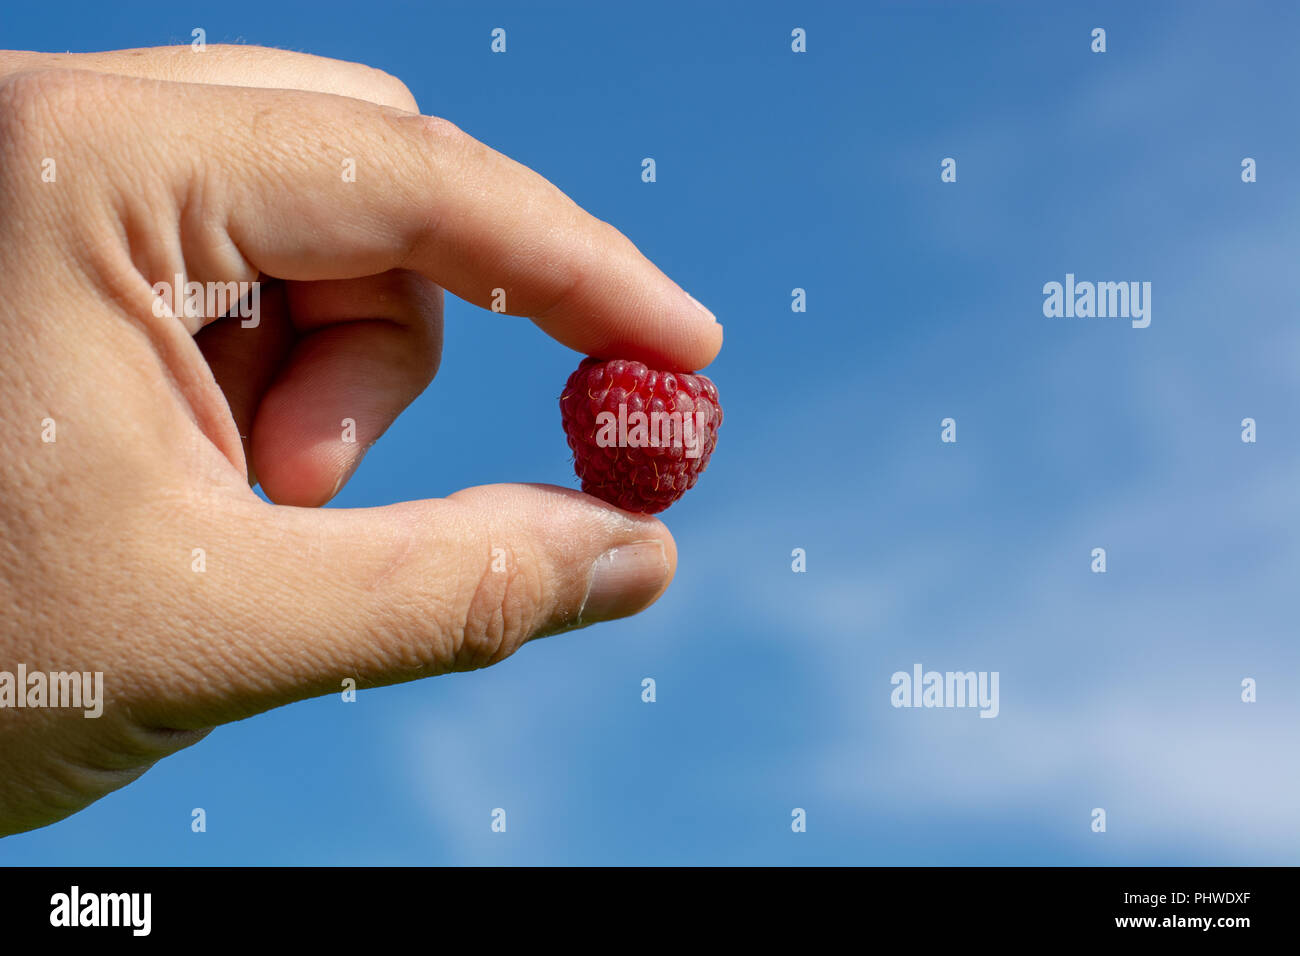 Raspberry picking. Male hands gathering organic raspberries. Stock Photo